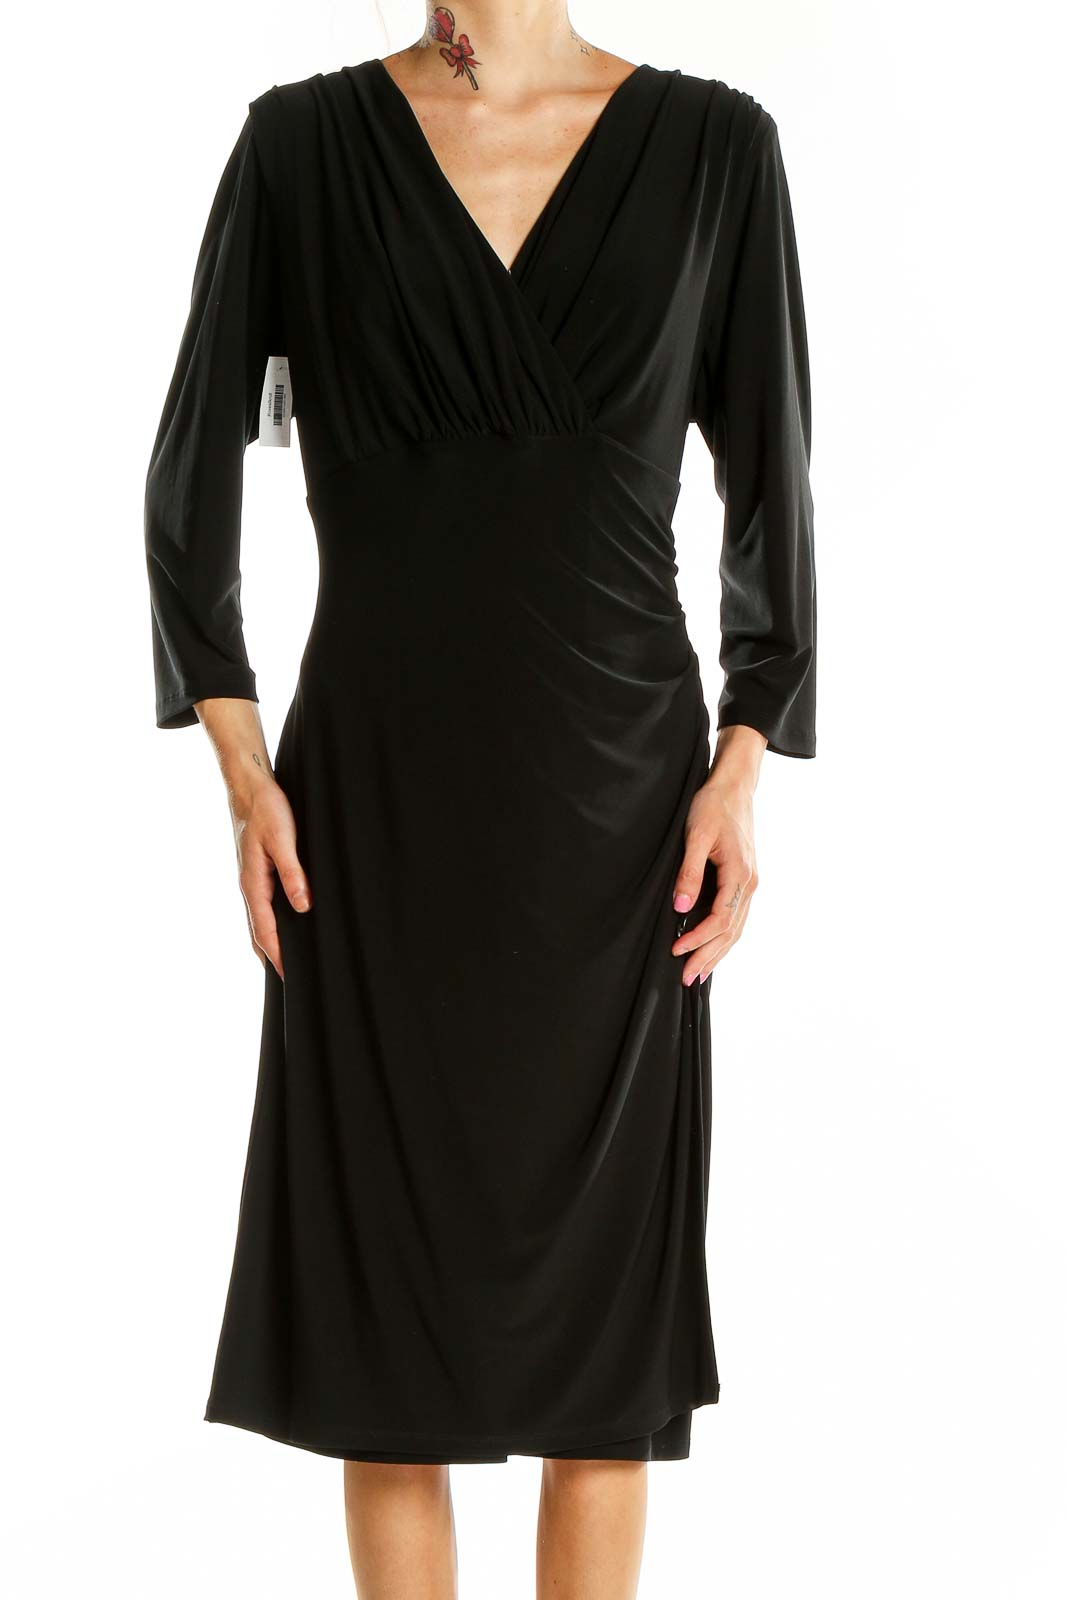 Black Classic Long Sleeve Sheath Dress Front